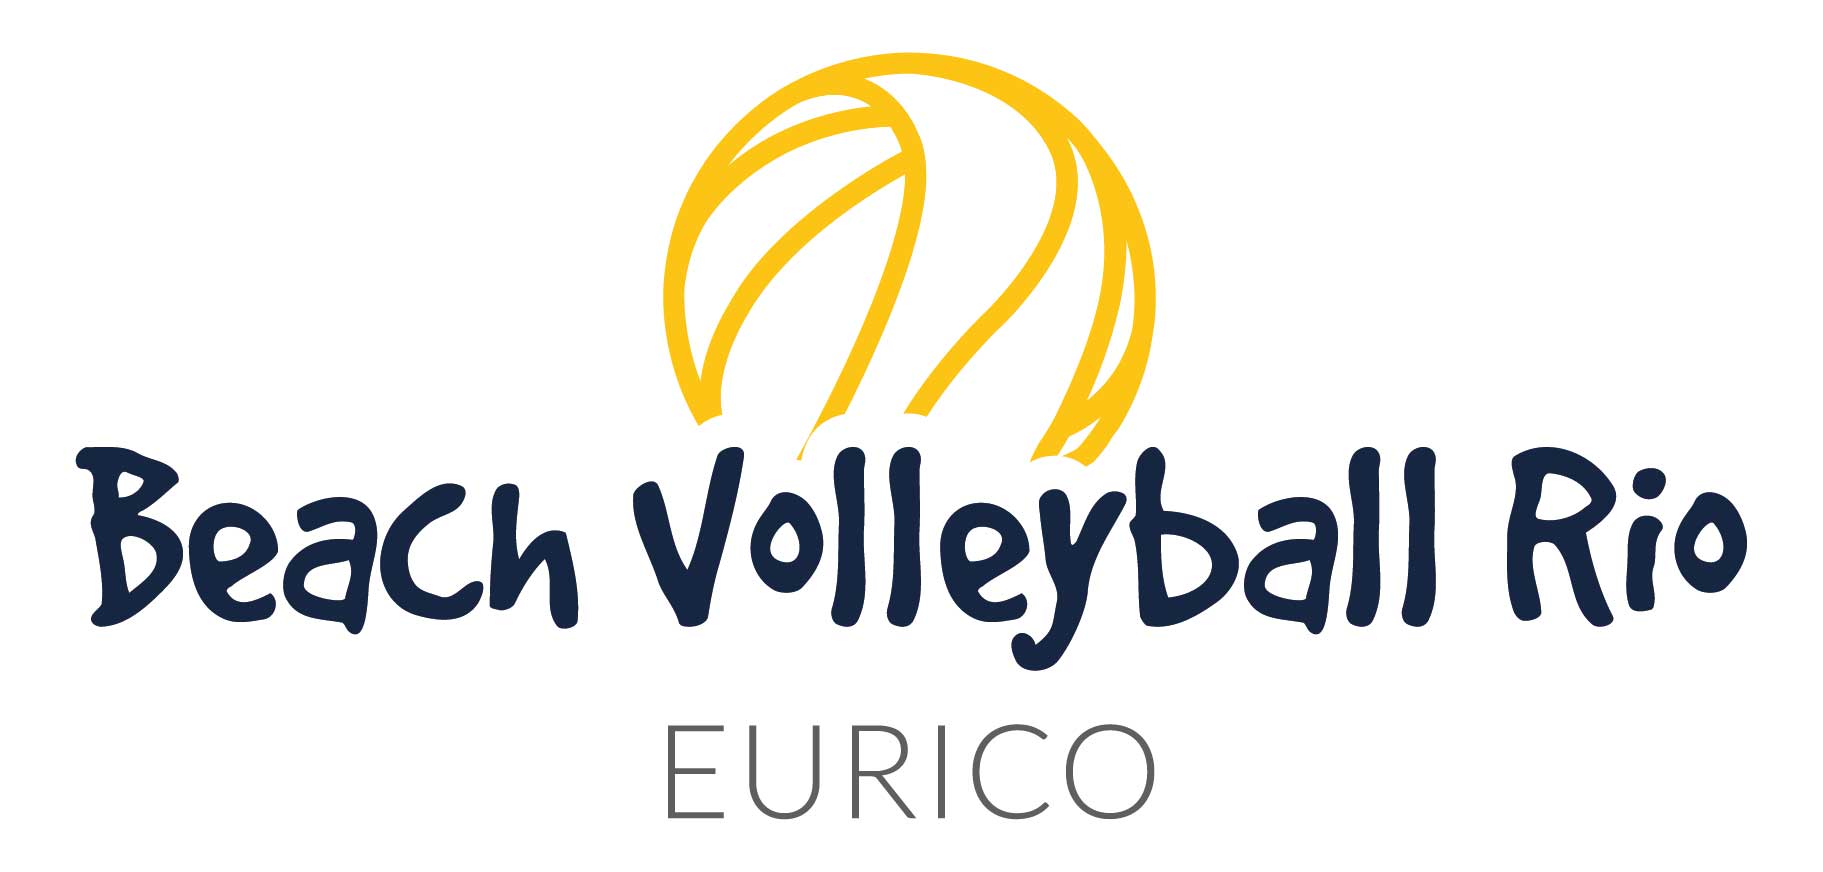 Beach volley ball rio Logo